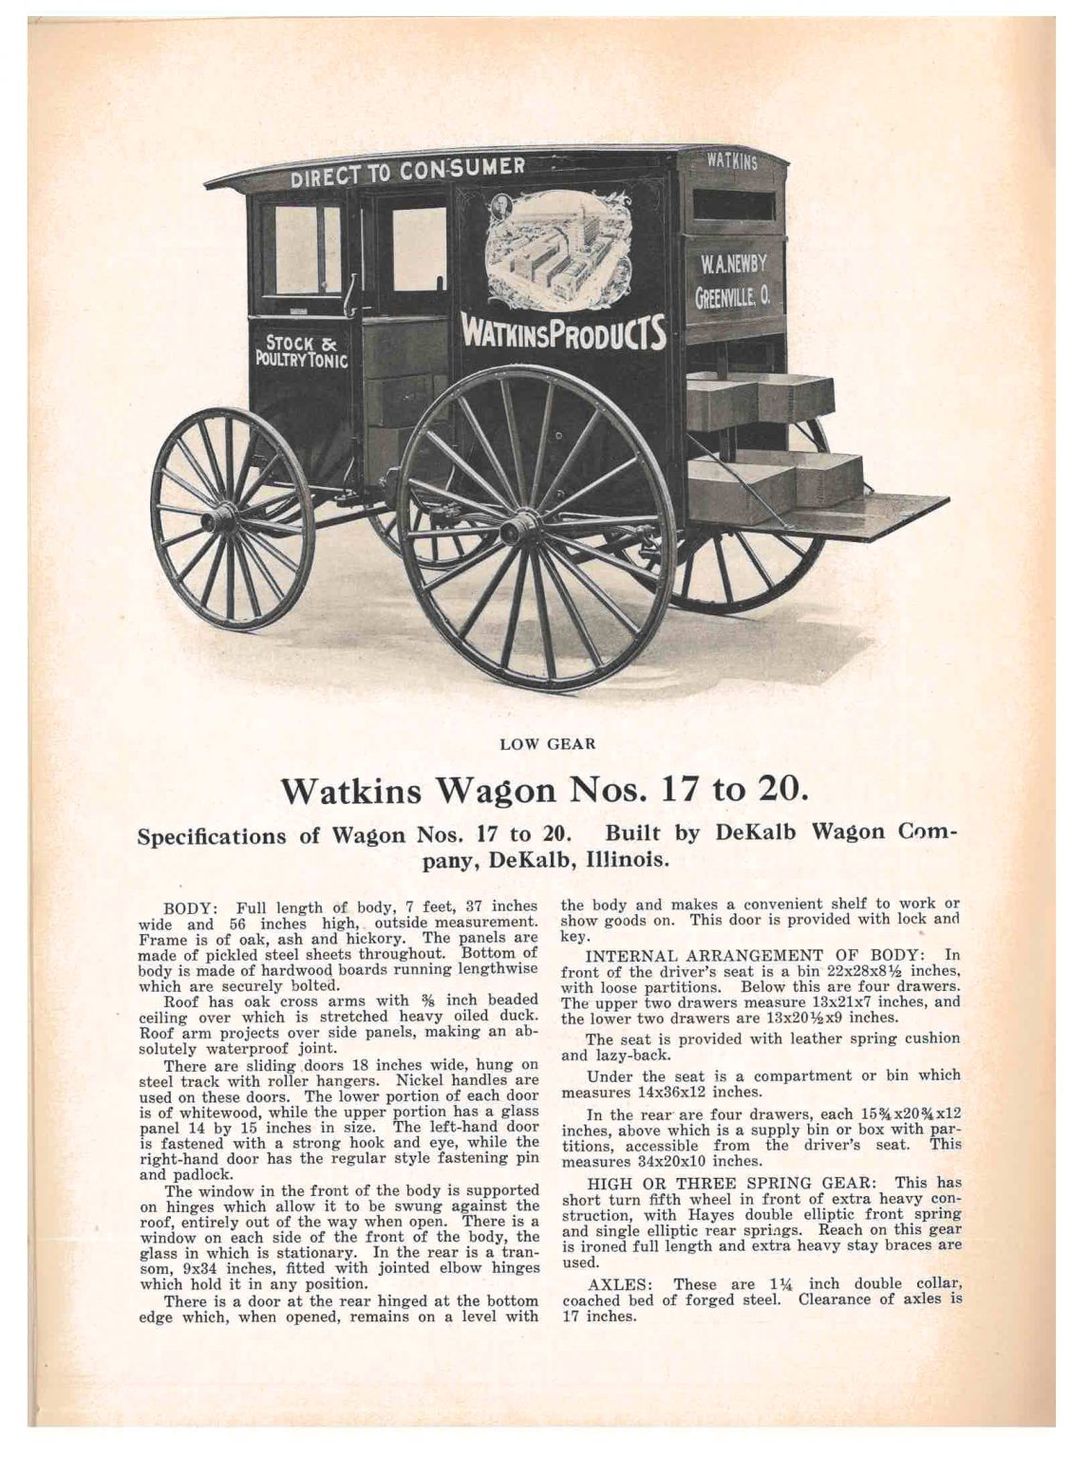 Early 20th century illustration of wagon.